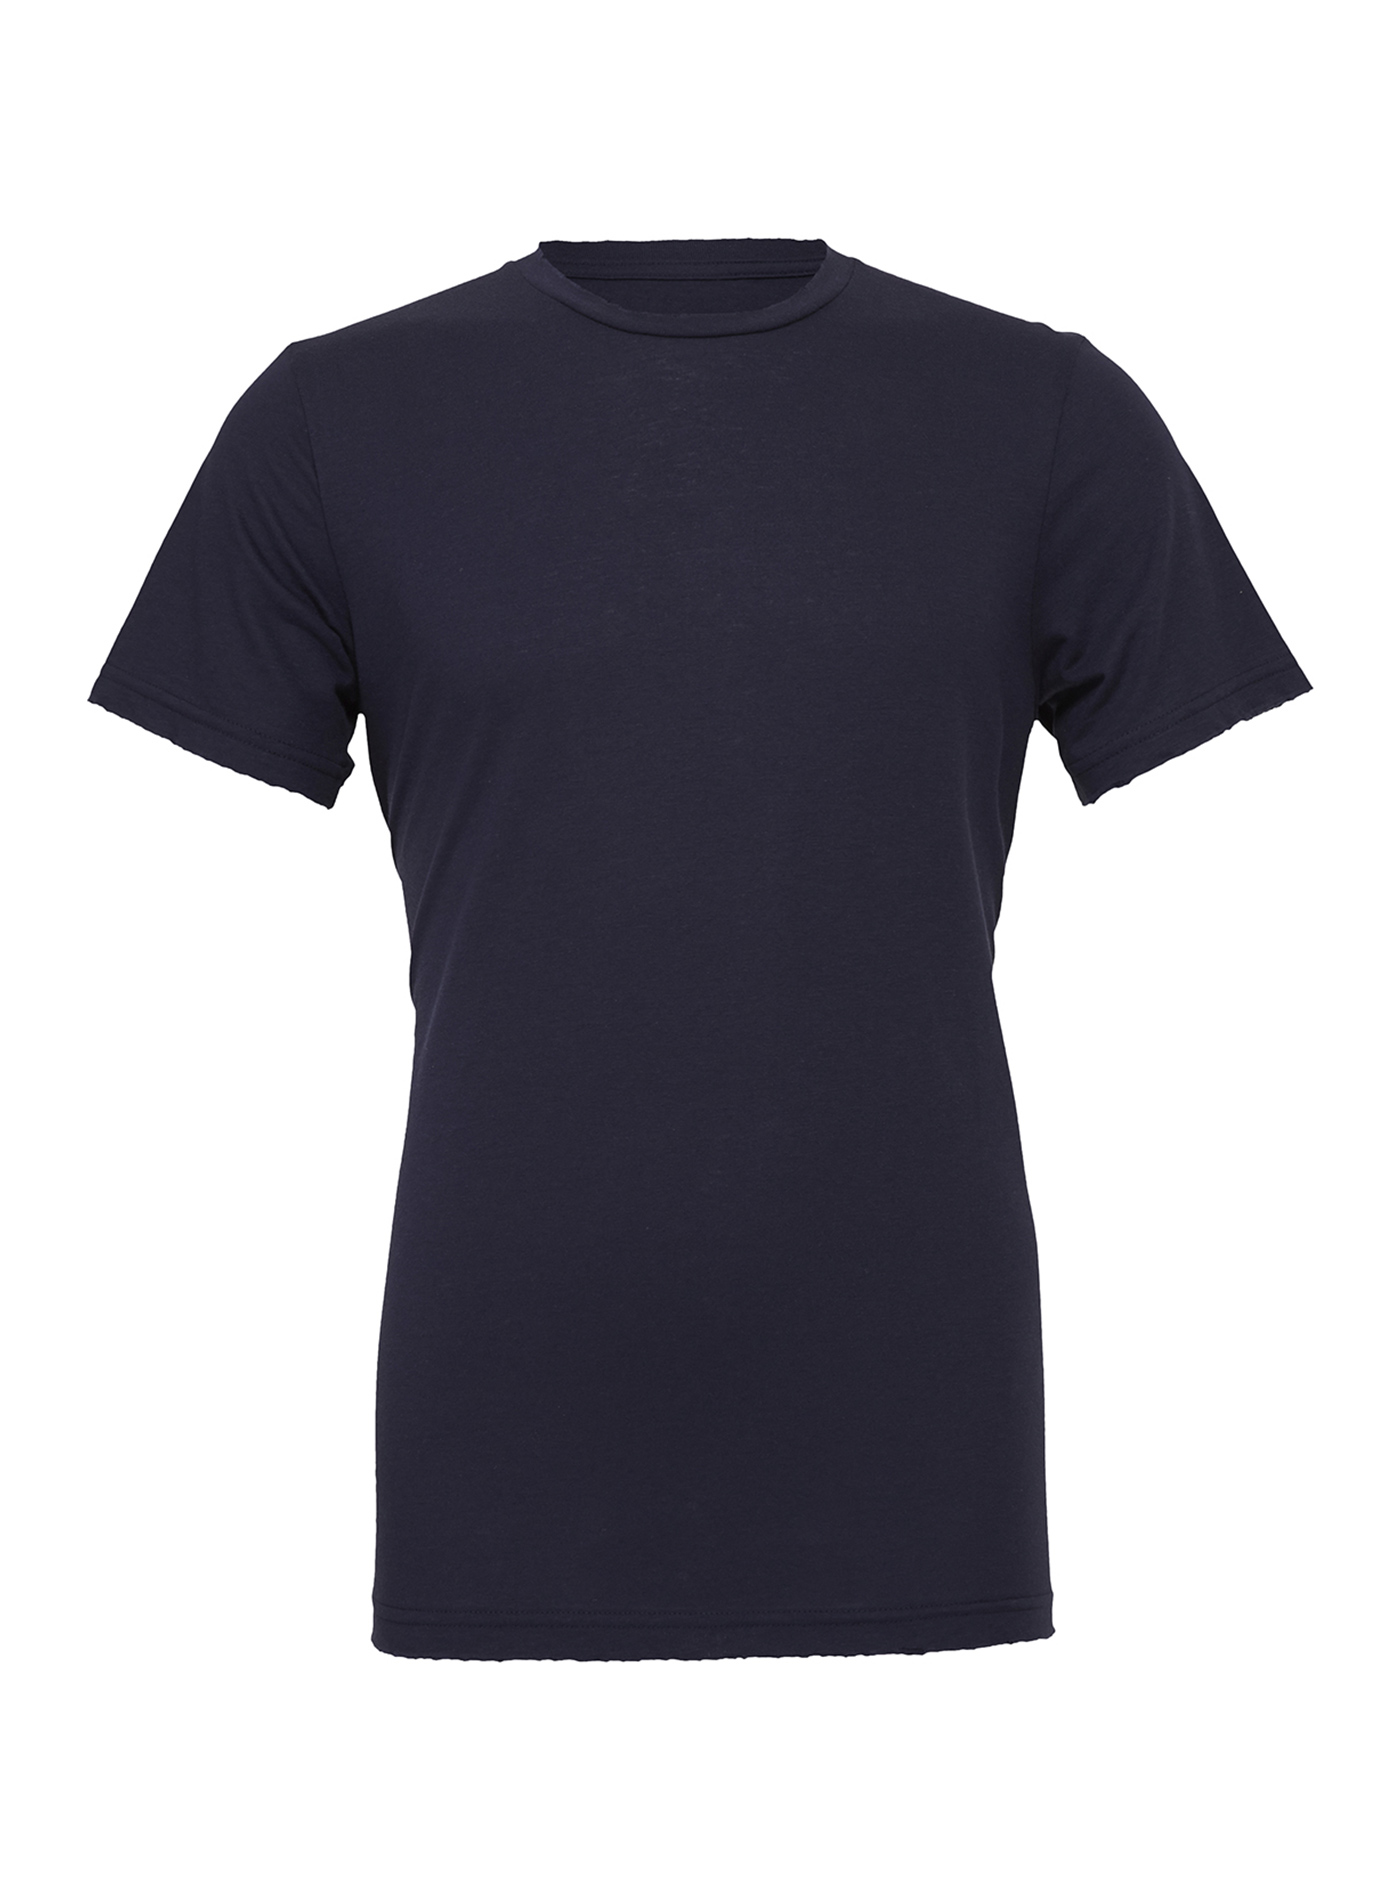 Unisex tričko Bella + Canvas Jersey - tmavě modrá L